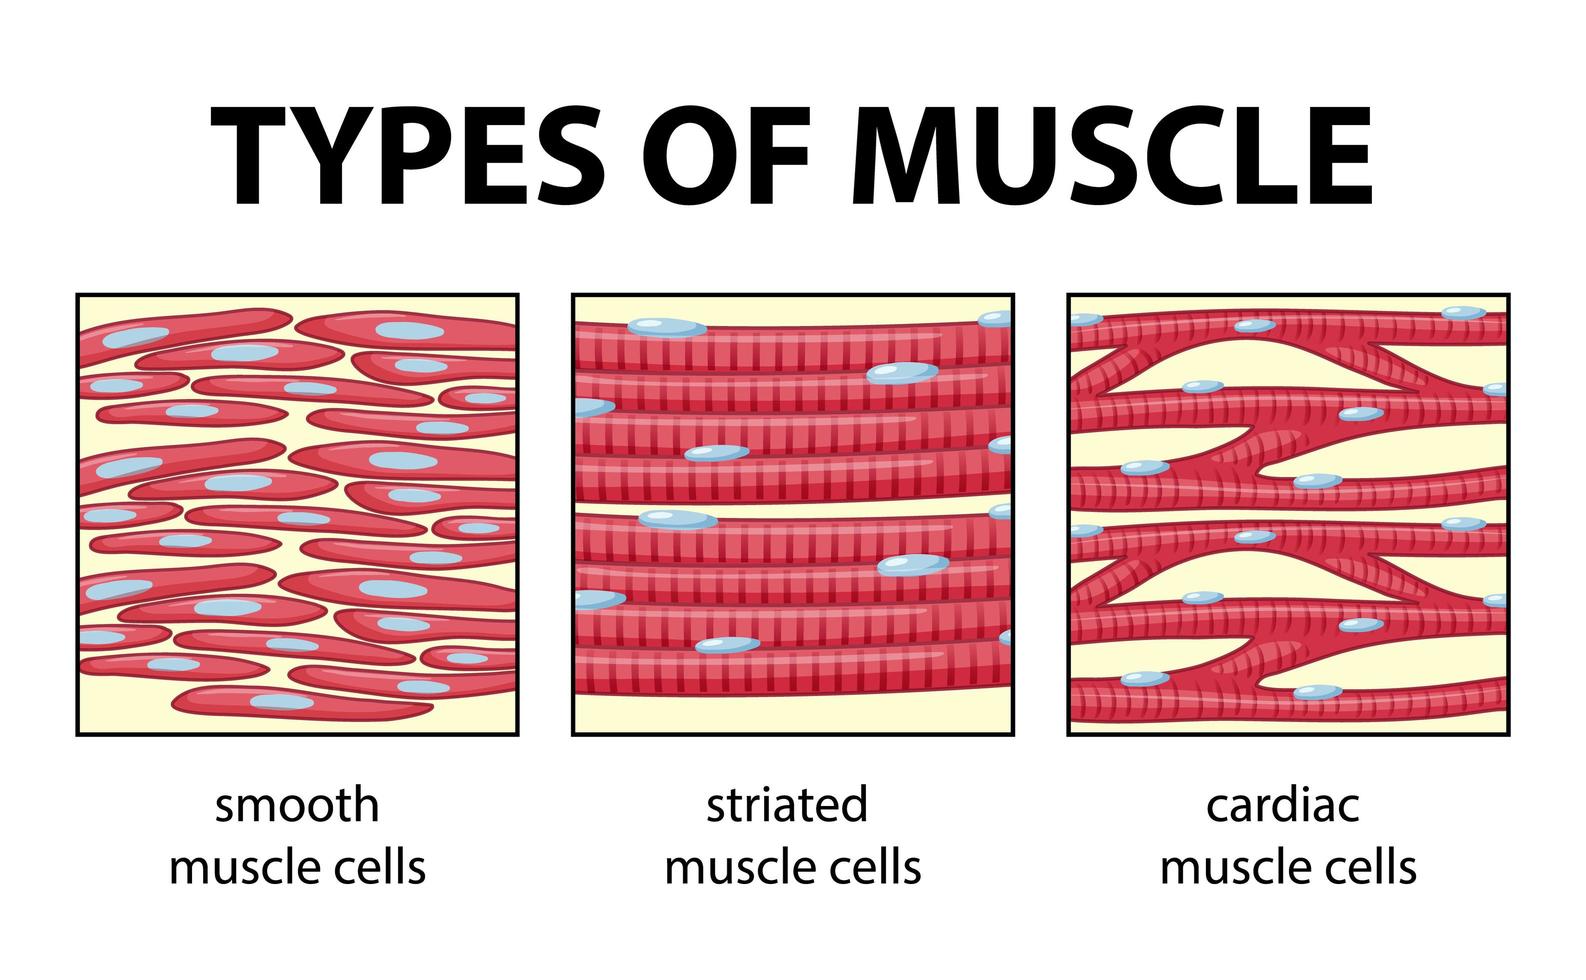 tipos de diagrama de células musculares vetor